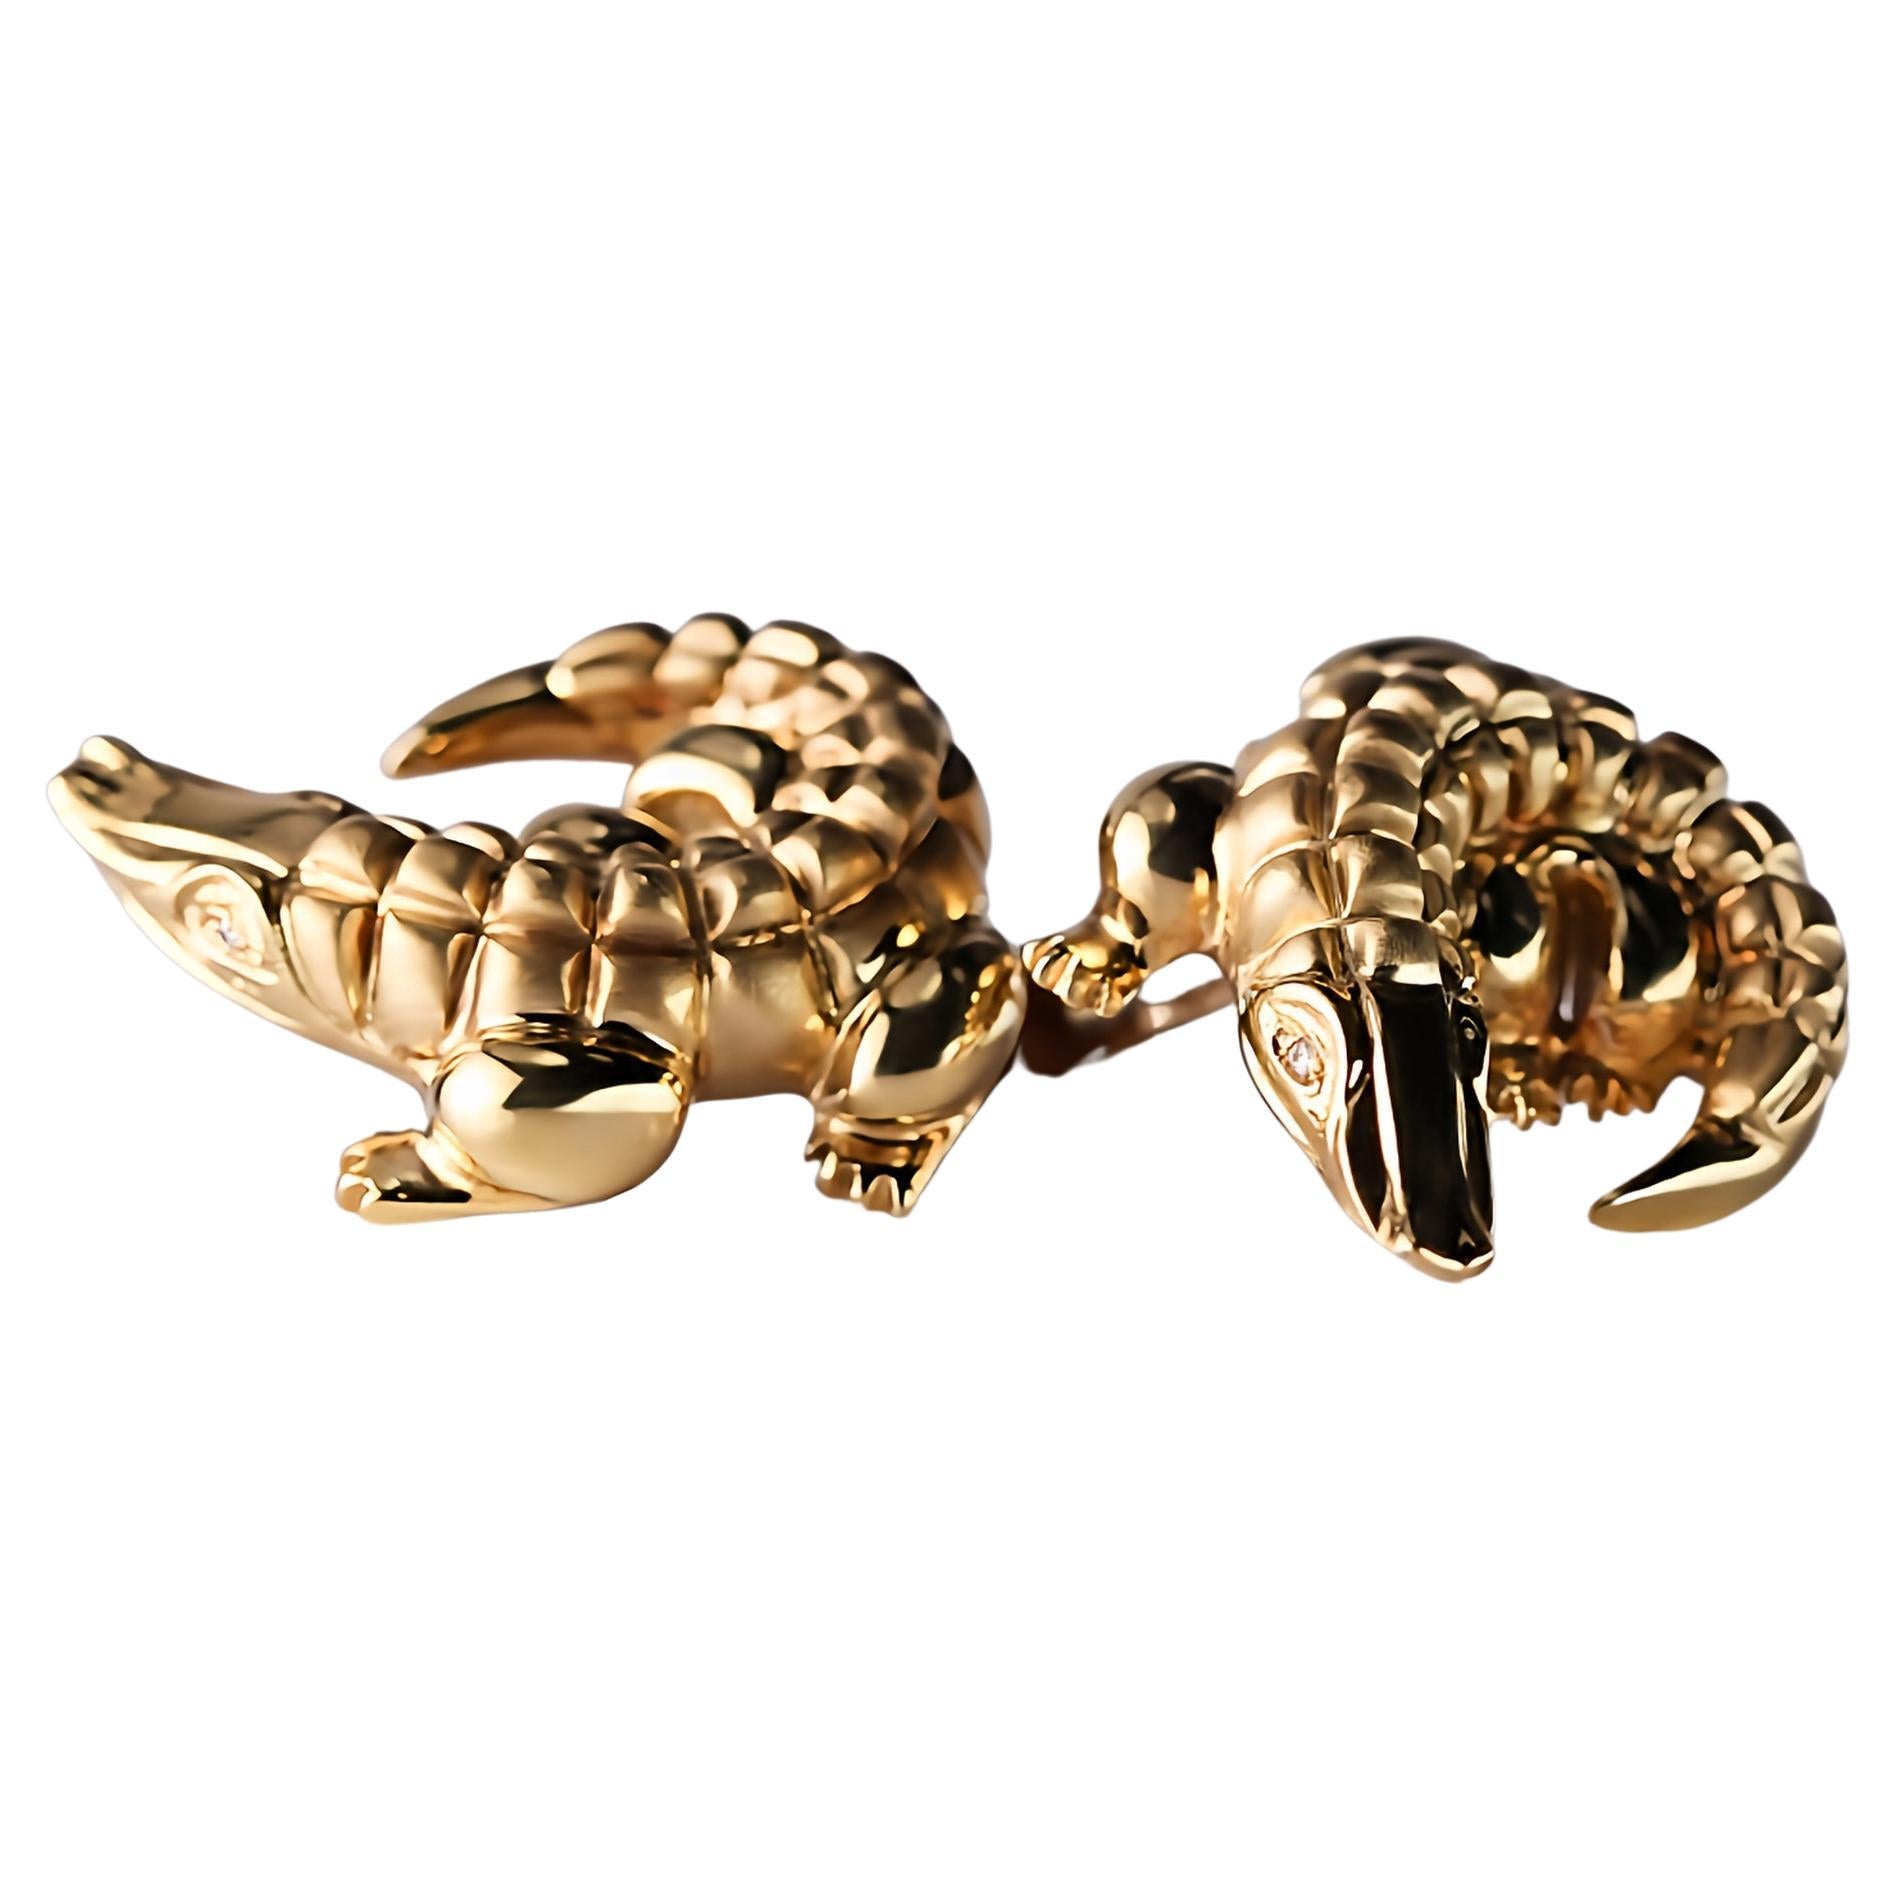 Charming 18 Karat Yellow Gold Crocodile Cufflinks with Diamond Eyes For Sale